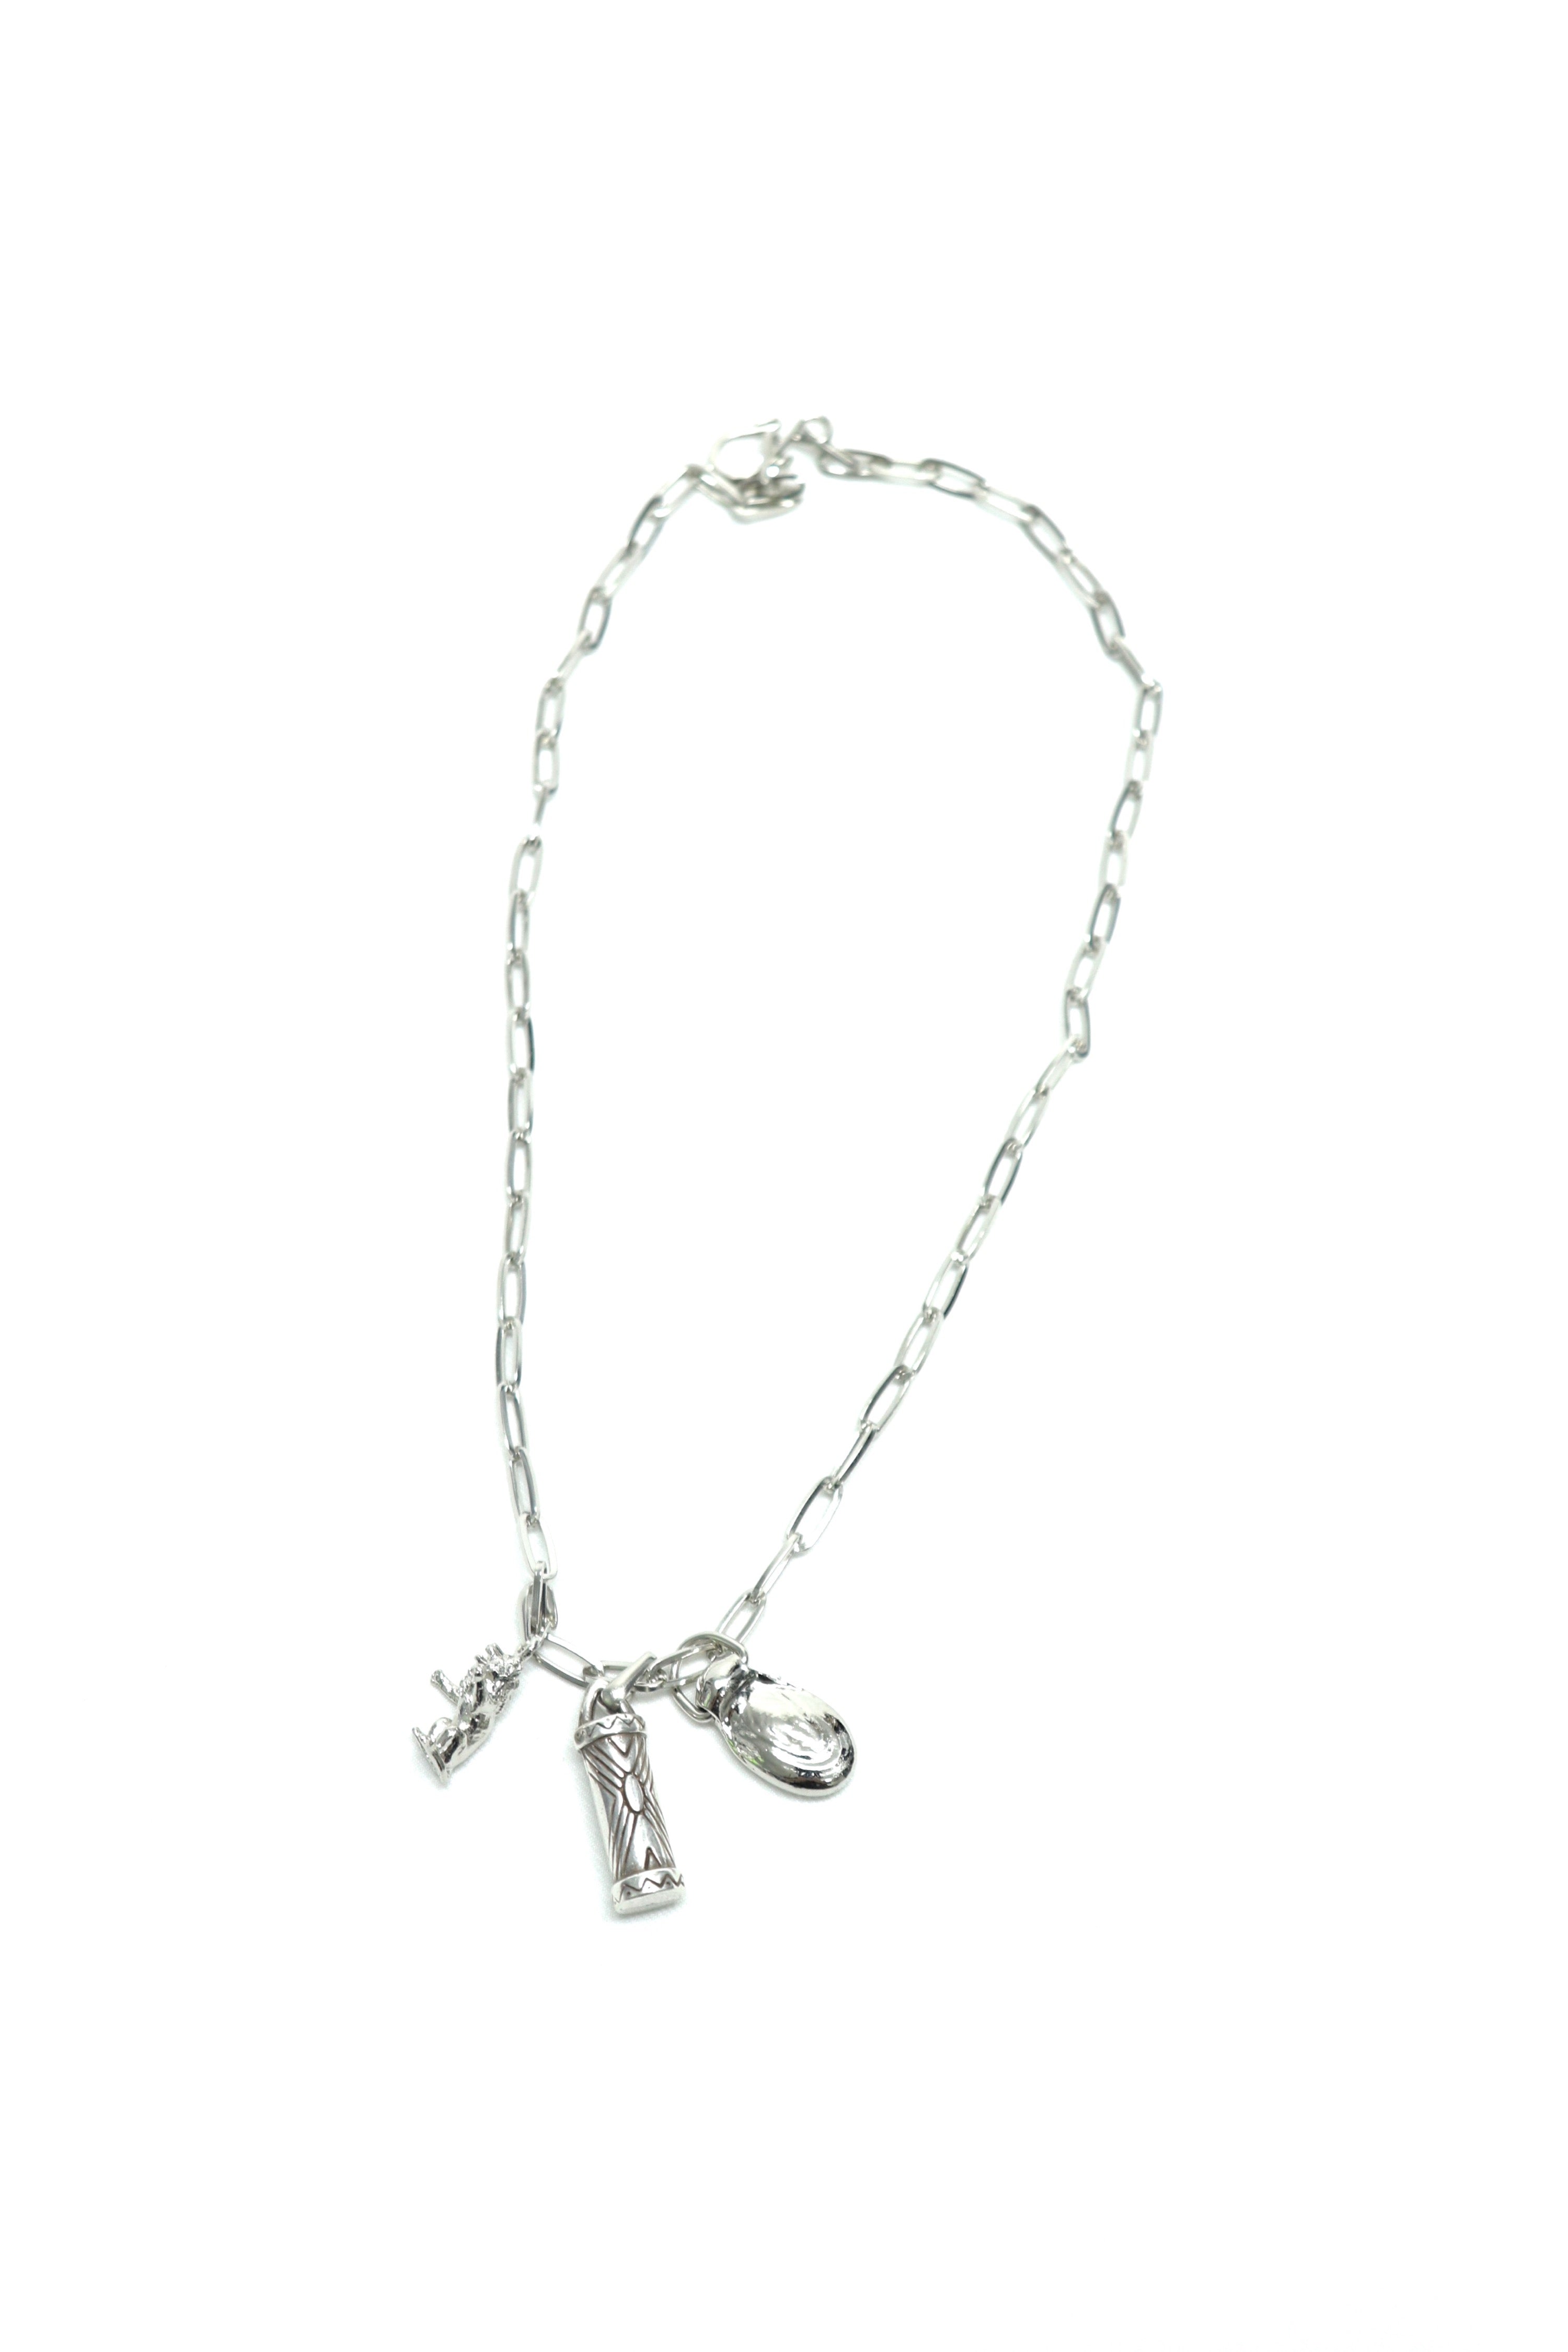 TOGA VIRILIS(トーガ ビリリース)22awのMotif necklace SILVERの通販 